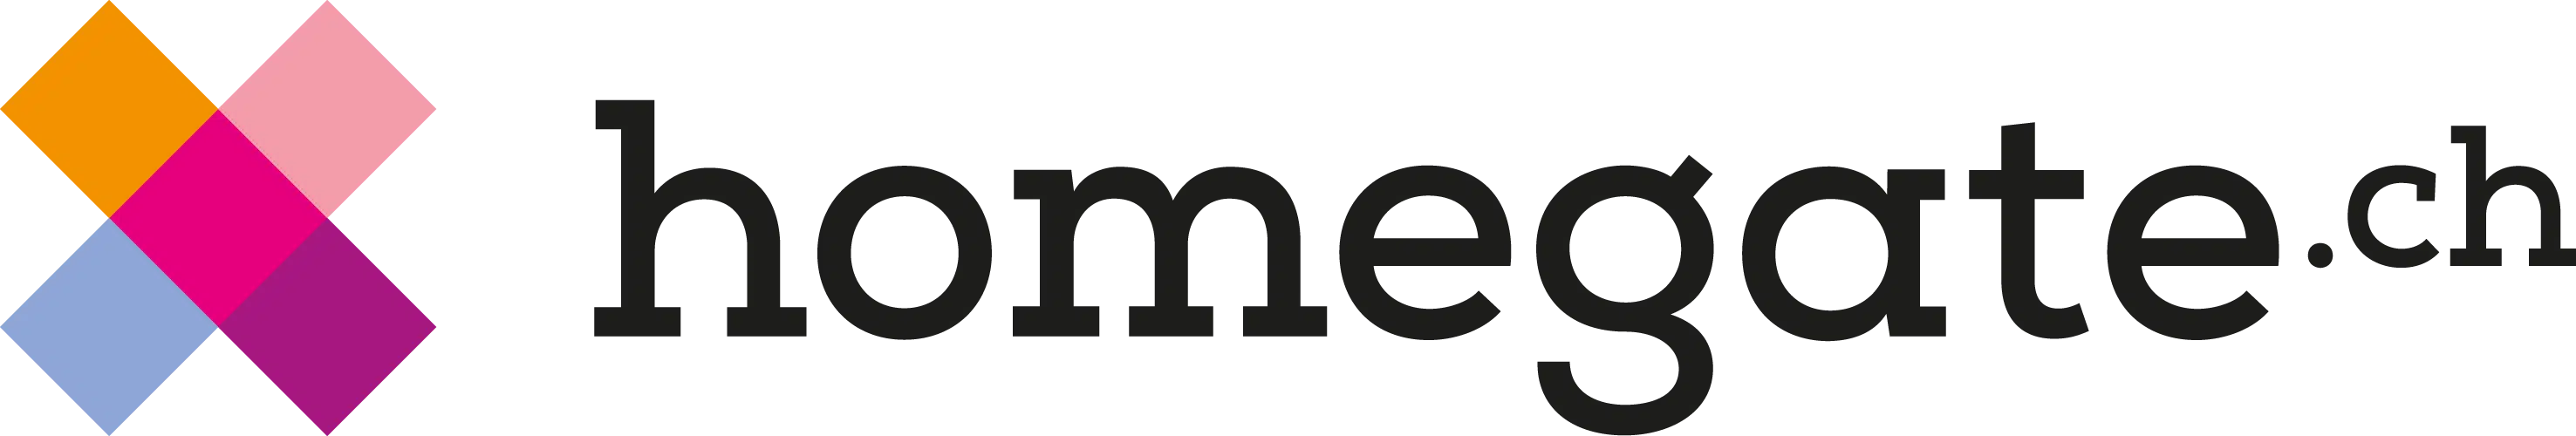 Homegate logo colour black